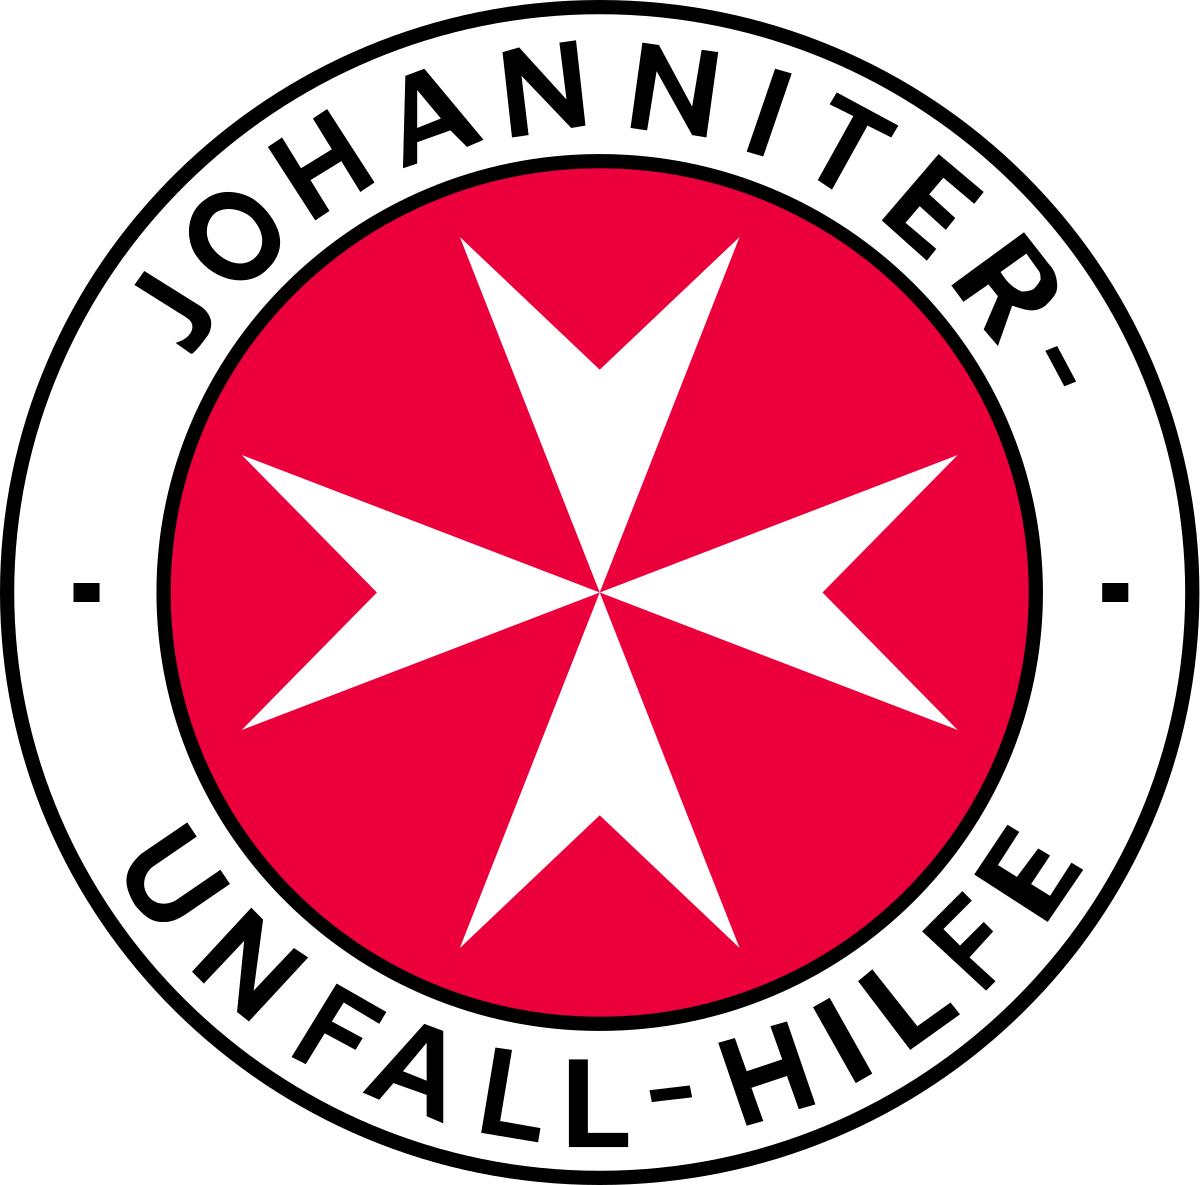 Johanniter-Unfall-Hilfe - Wikipedia